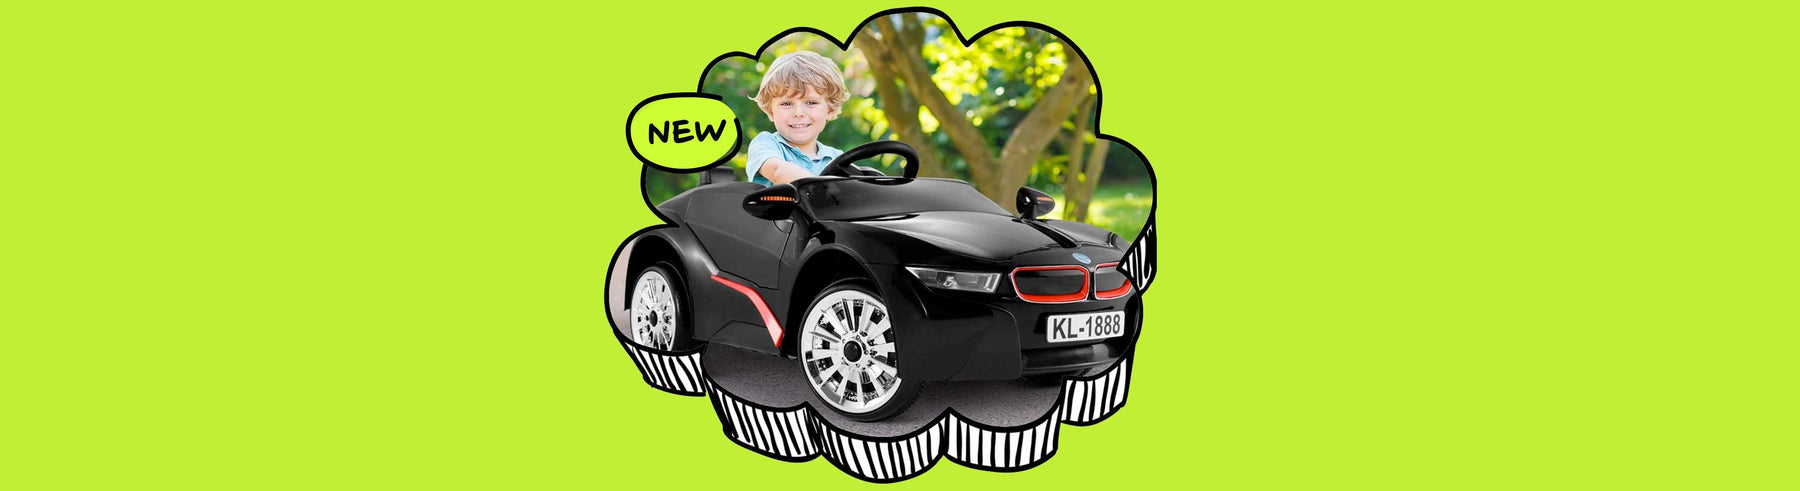 BMW i8 Inspired Kids Ride On Car